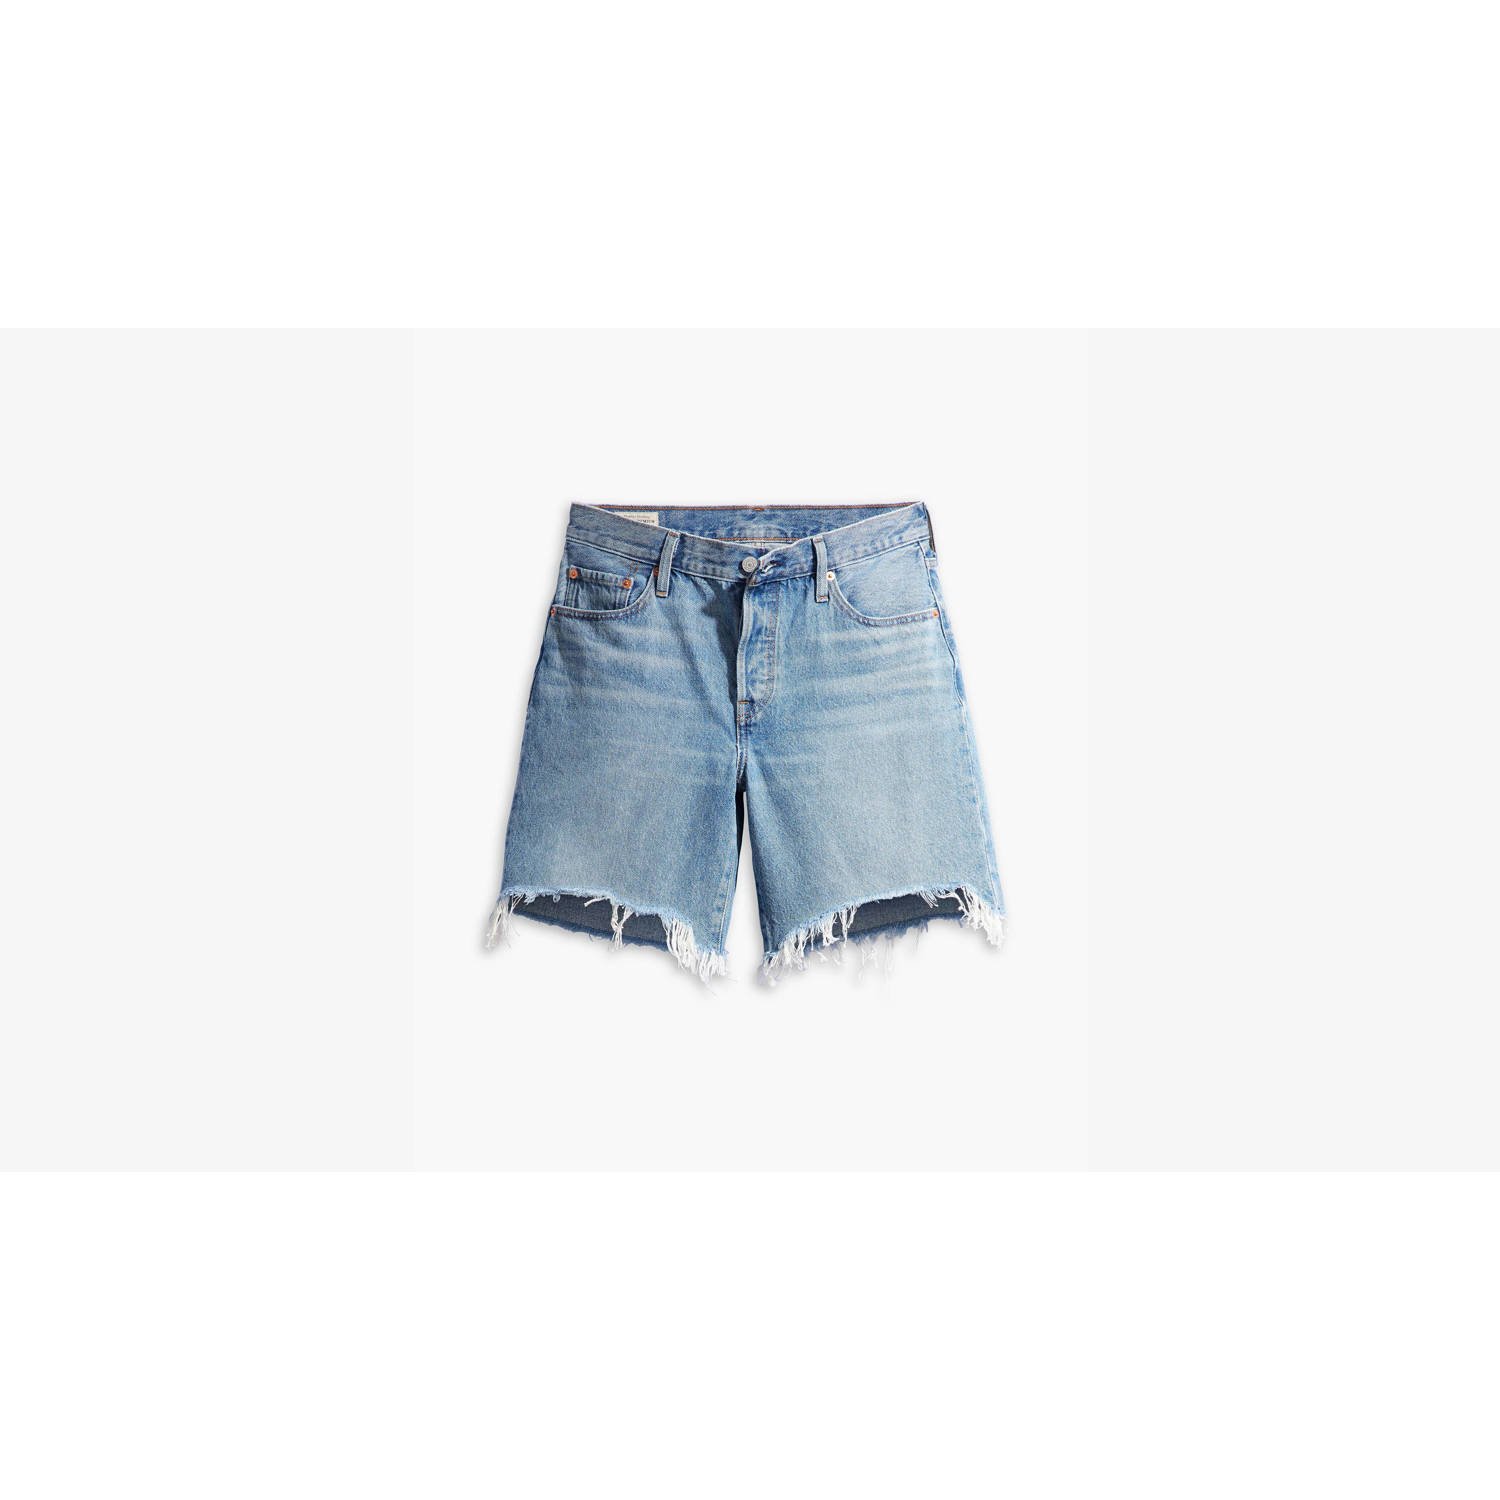 Levi's 501 90's jeans short light blue denim